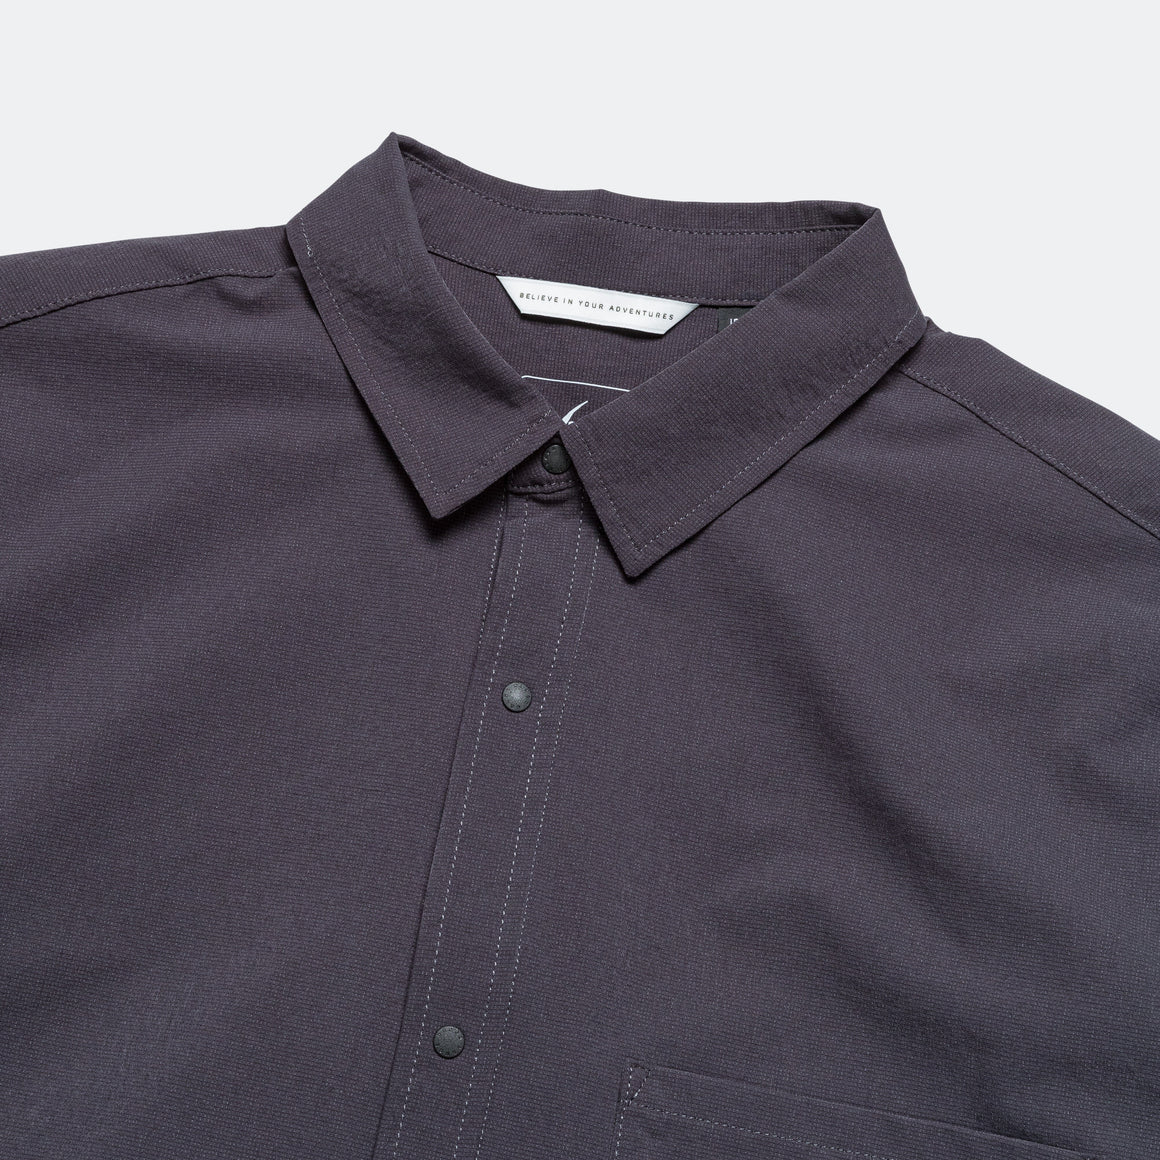 Nanga - Air Cloth Comfy S/S Shirt - Black - UP THERE